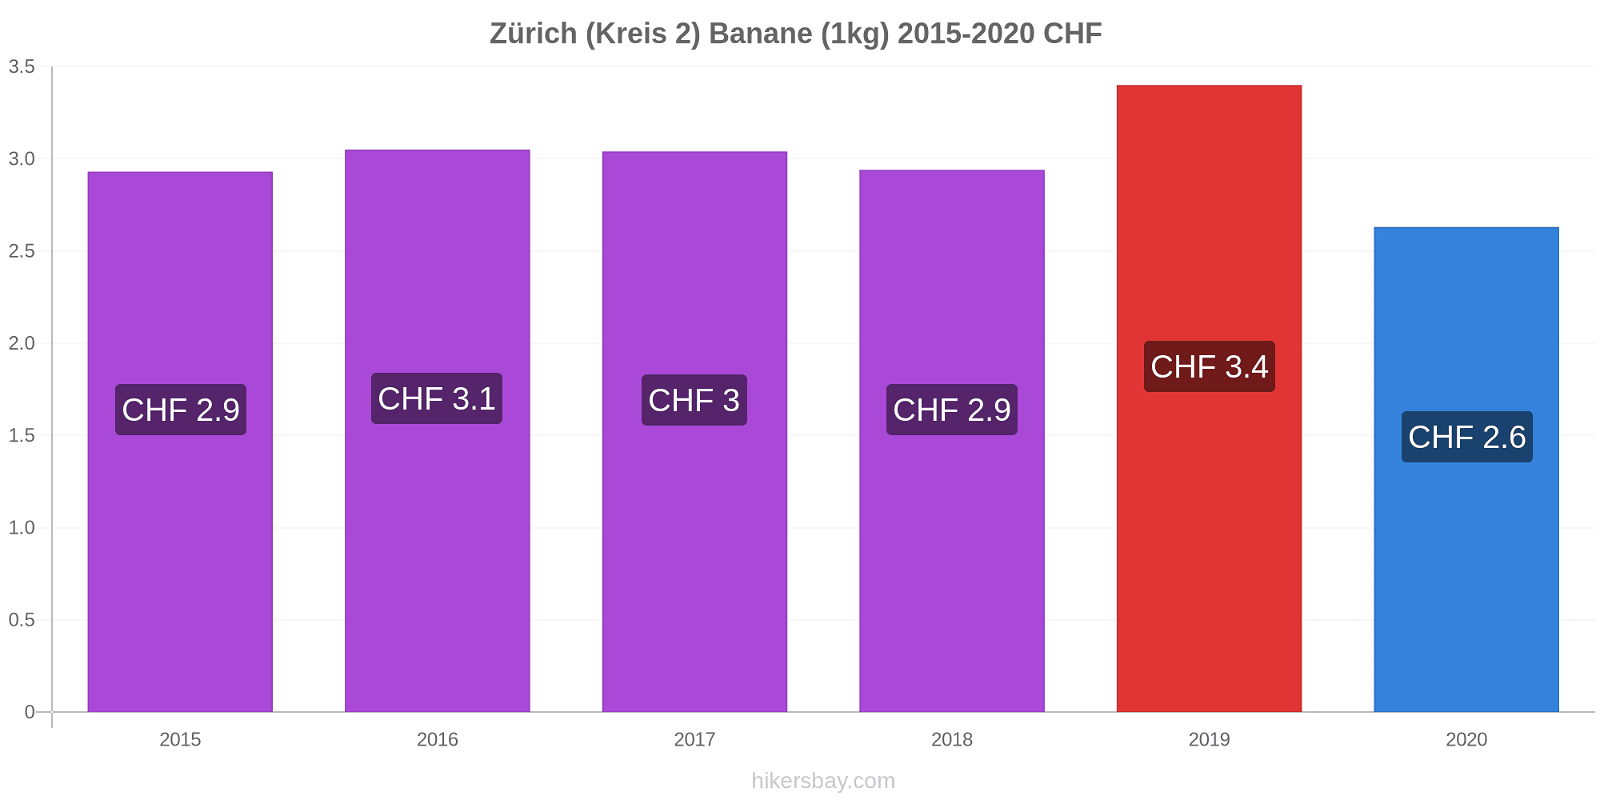 Zürich (Kreis 2) variazioni di prezzo Banana (1kg) hikersbay.com